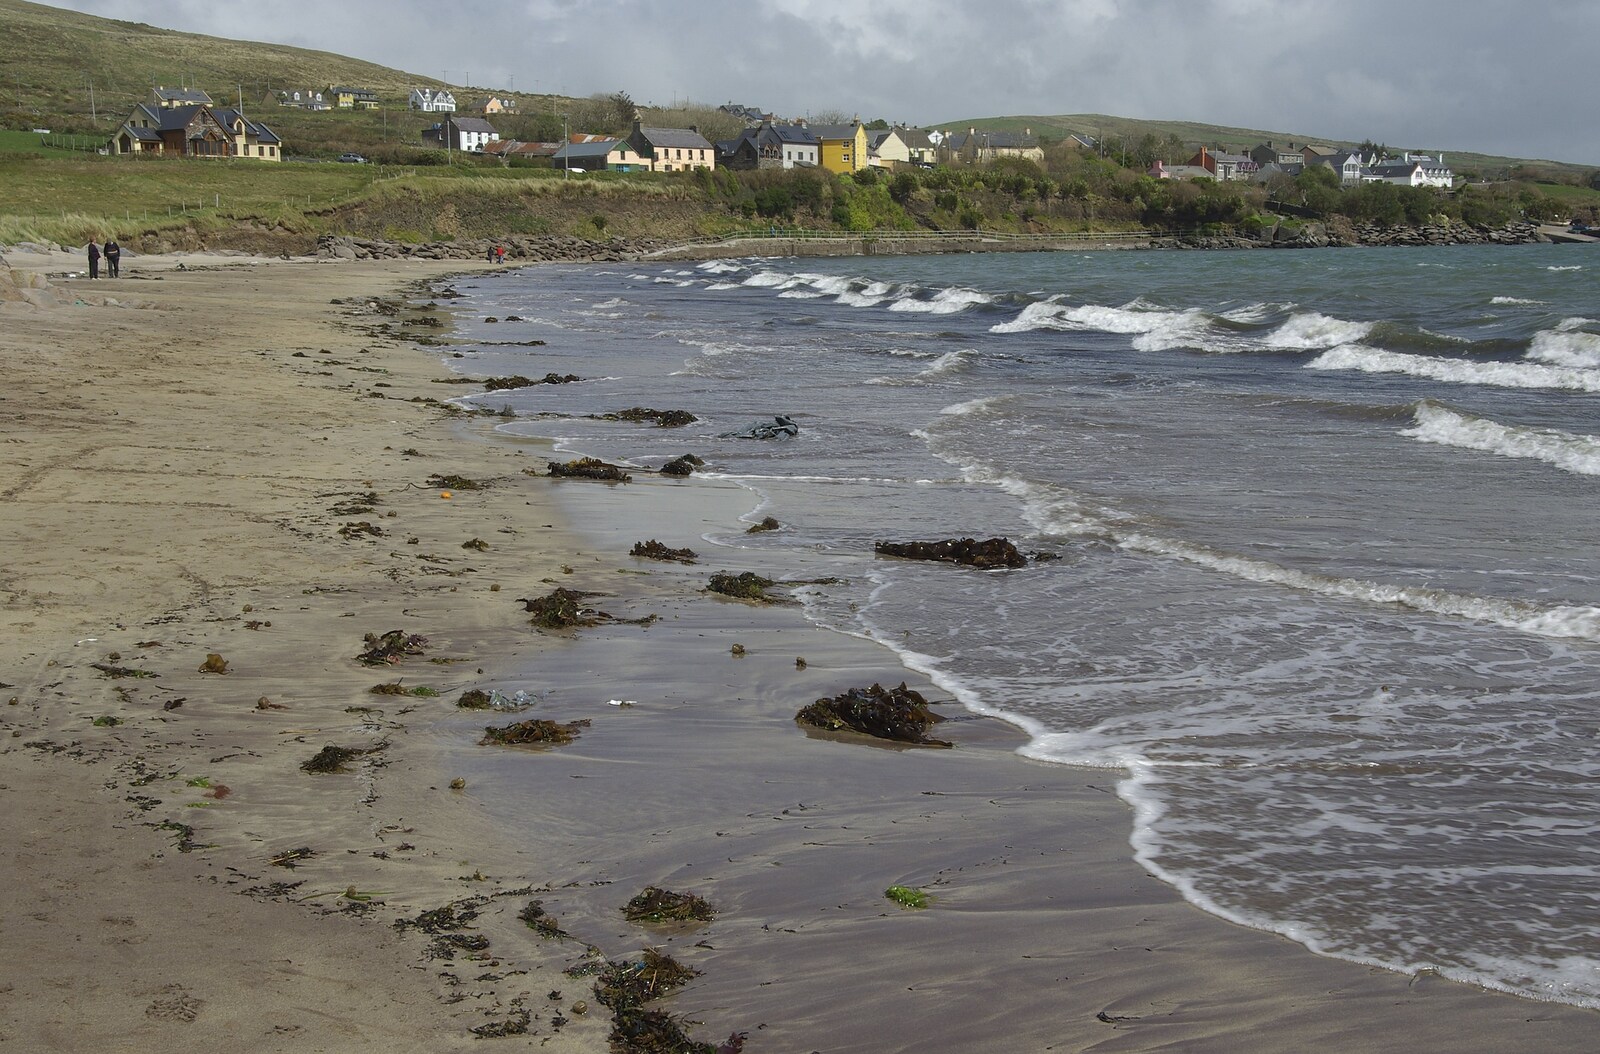 Connor Pass, Slea Head and Dingle, County Kerry, Ireland - 4th May 2008: The beach near Slea Head